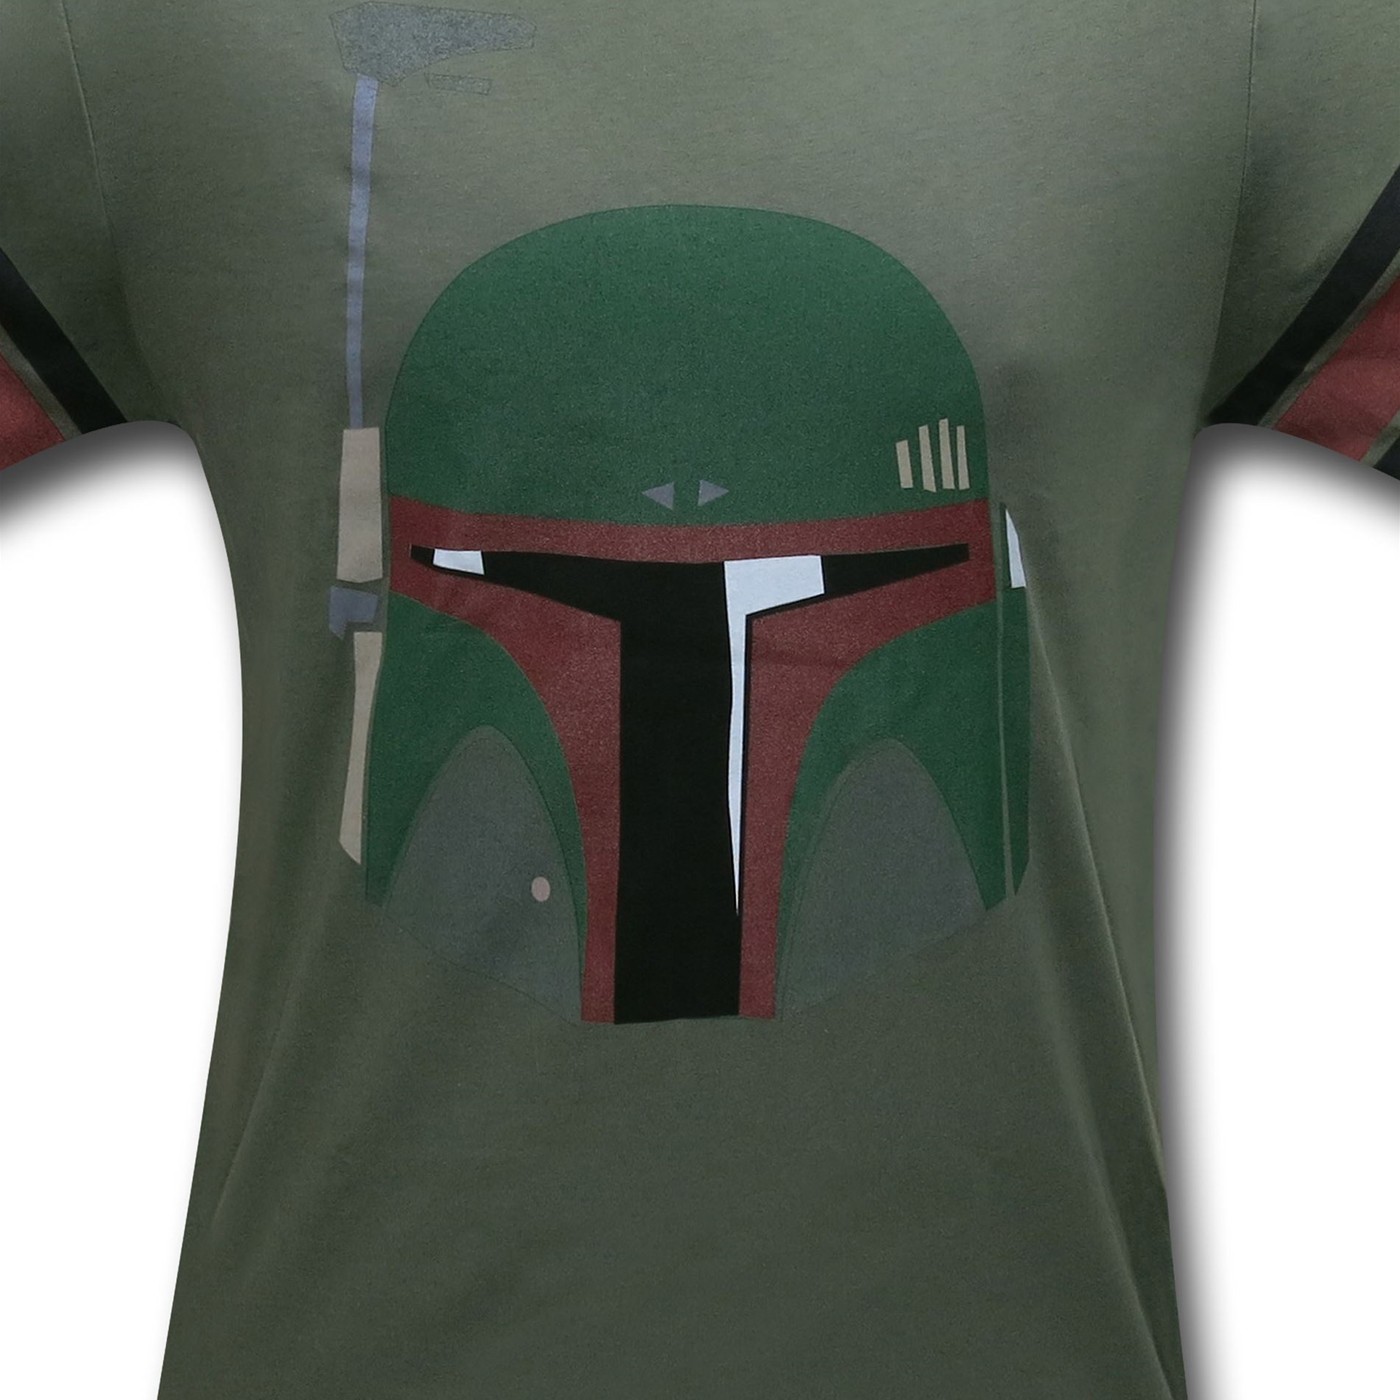 Star Wars Boba Fett Striped 30S T-Shirt